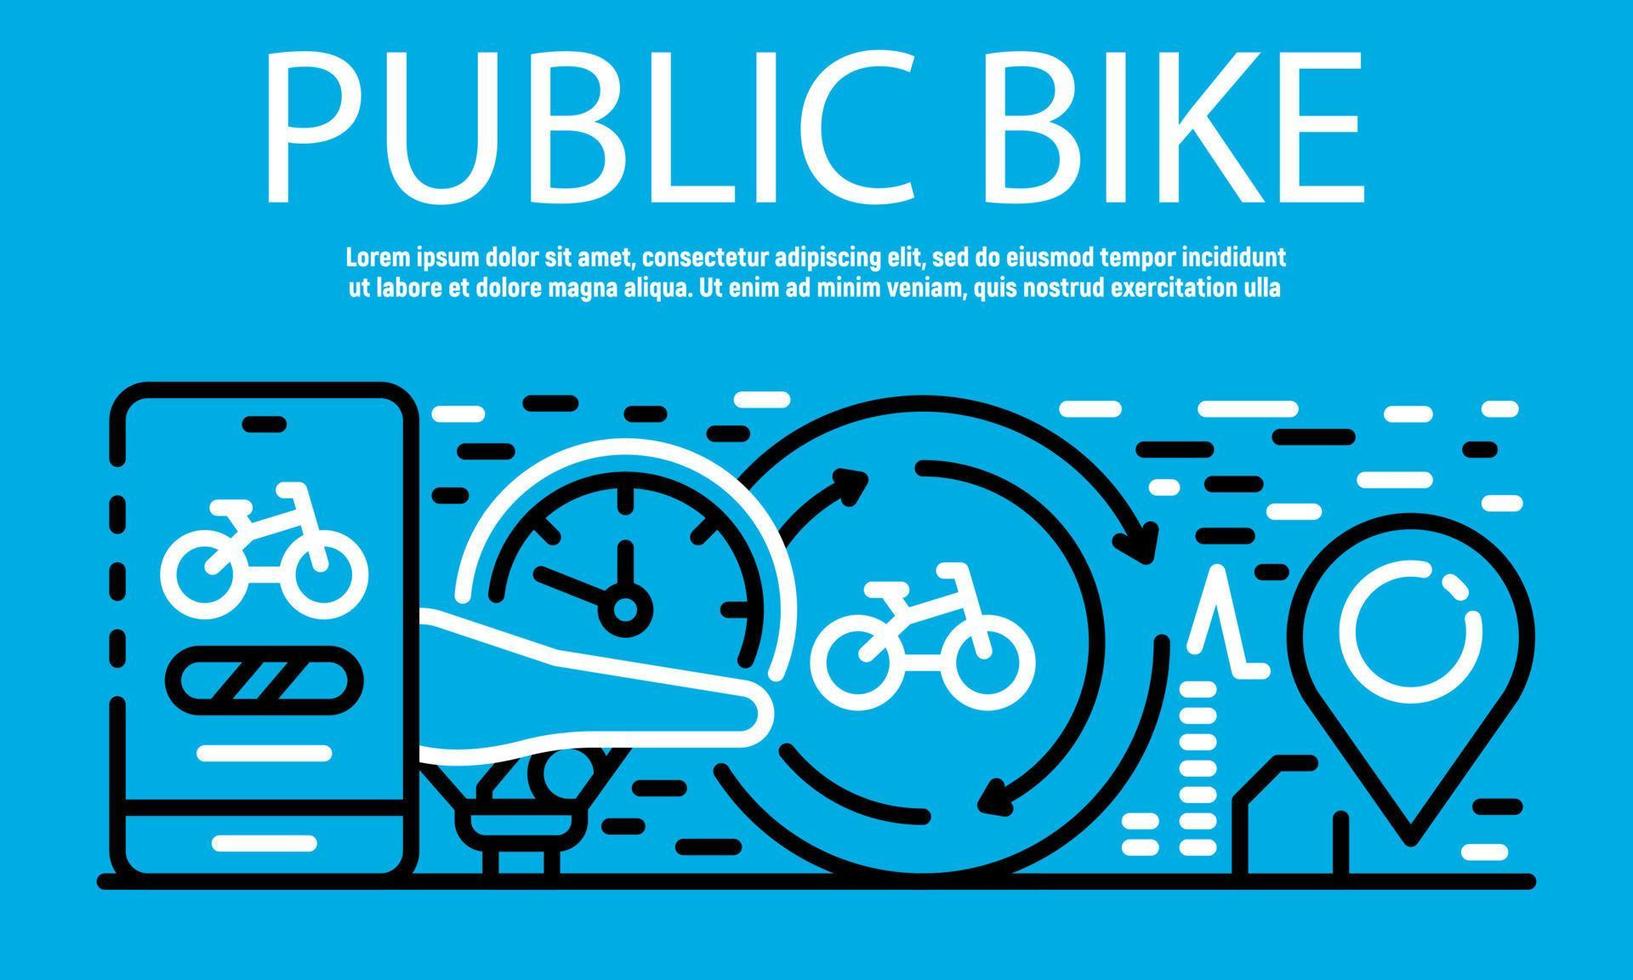 Public bike banner, outline style vector